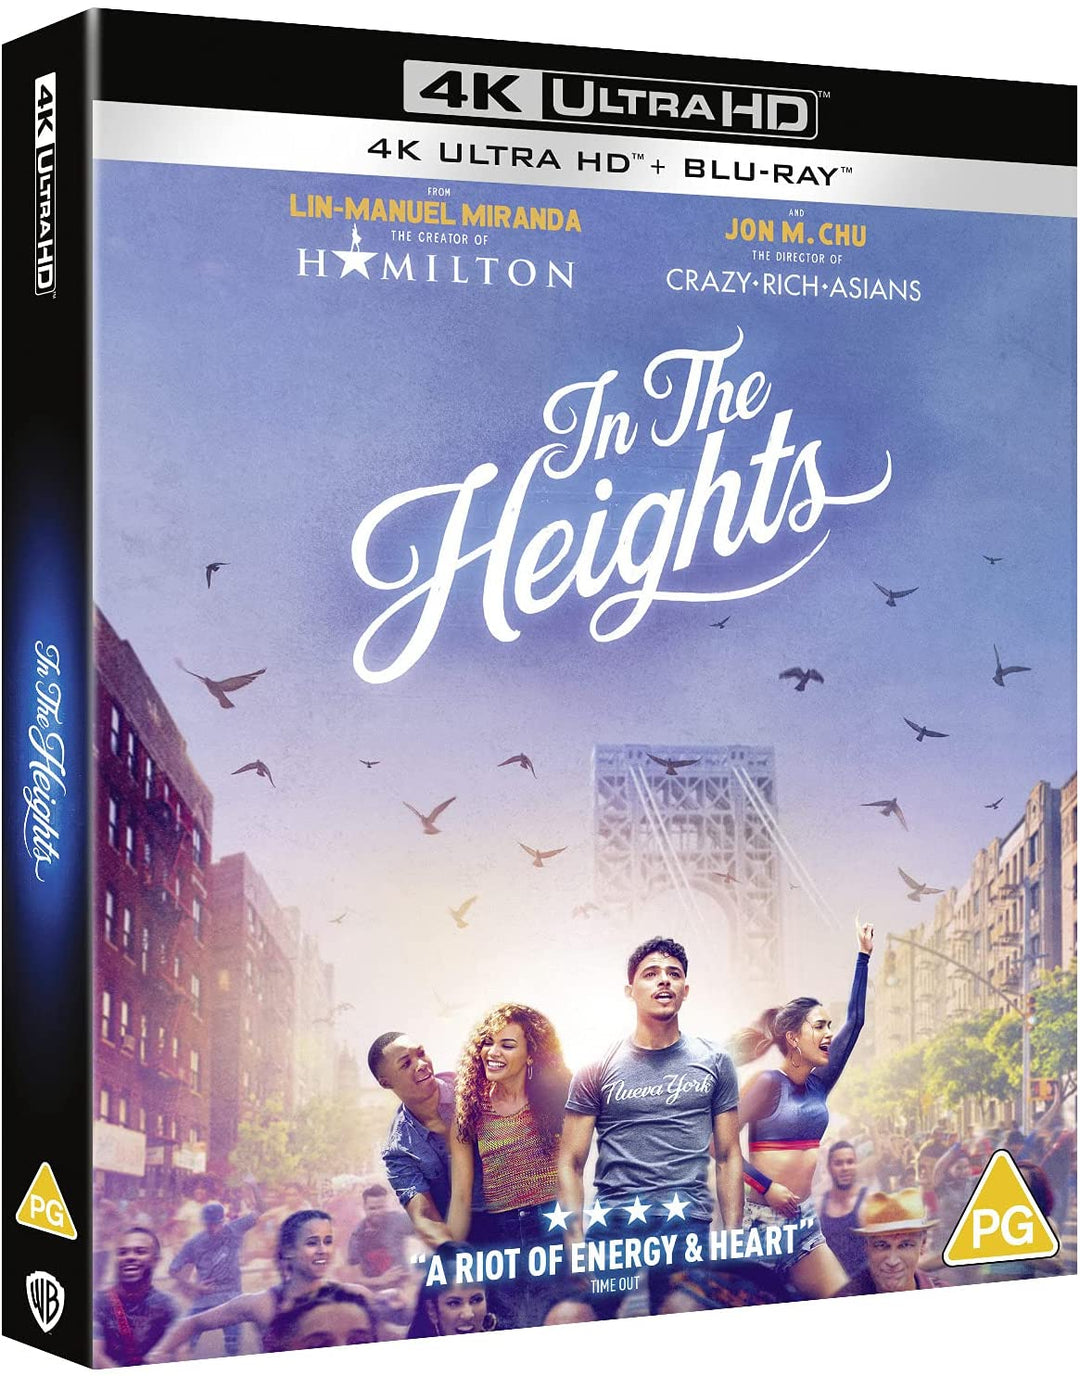 In The Heights [4K Ultra HD] [2021] [Region Free] – Musical/Drama [Blu-ray]